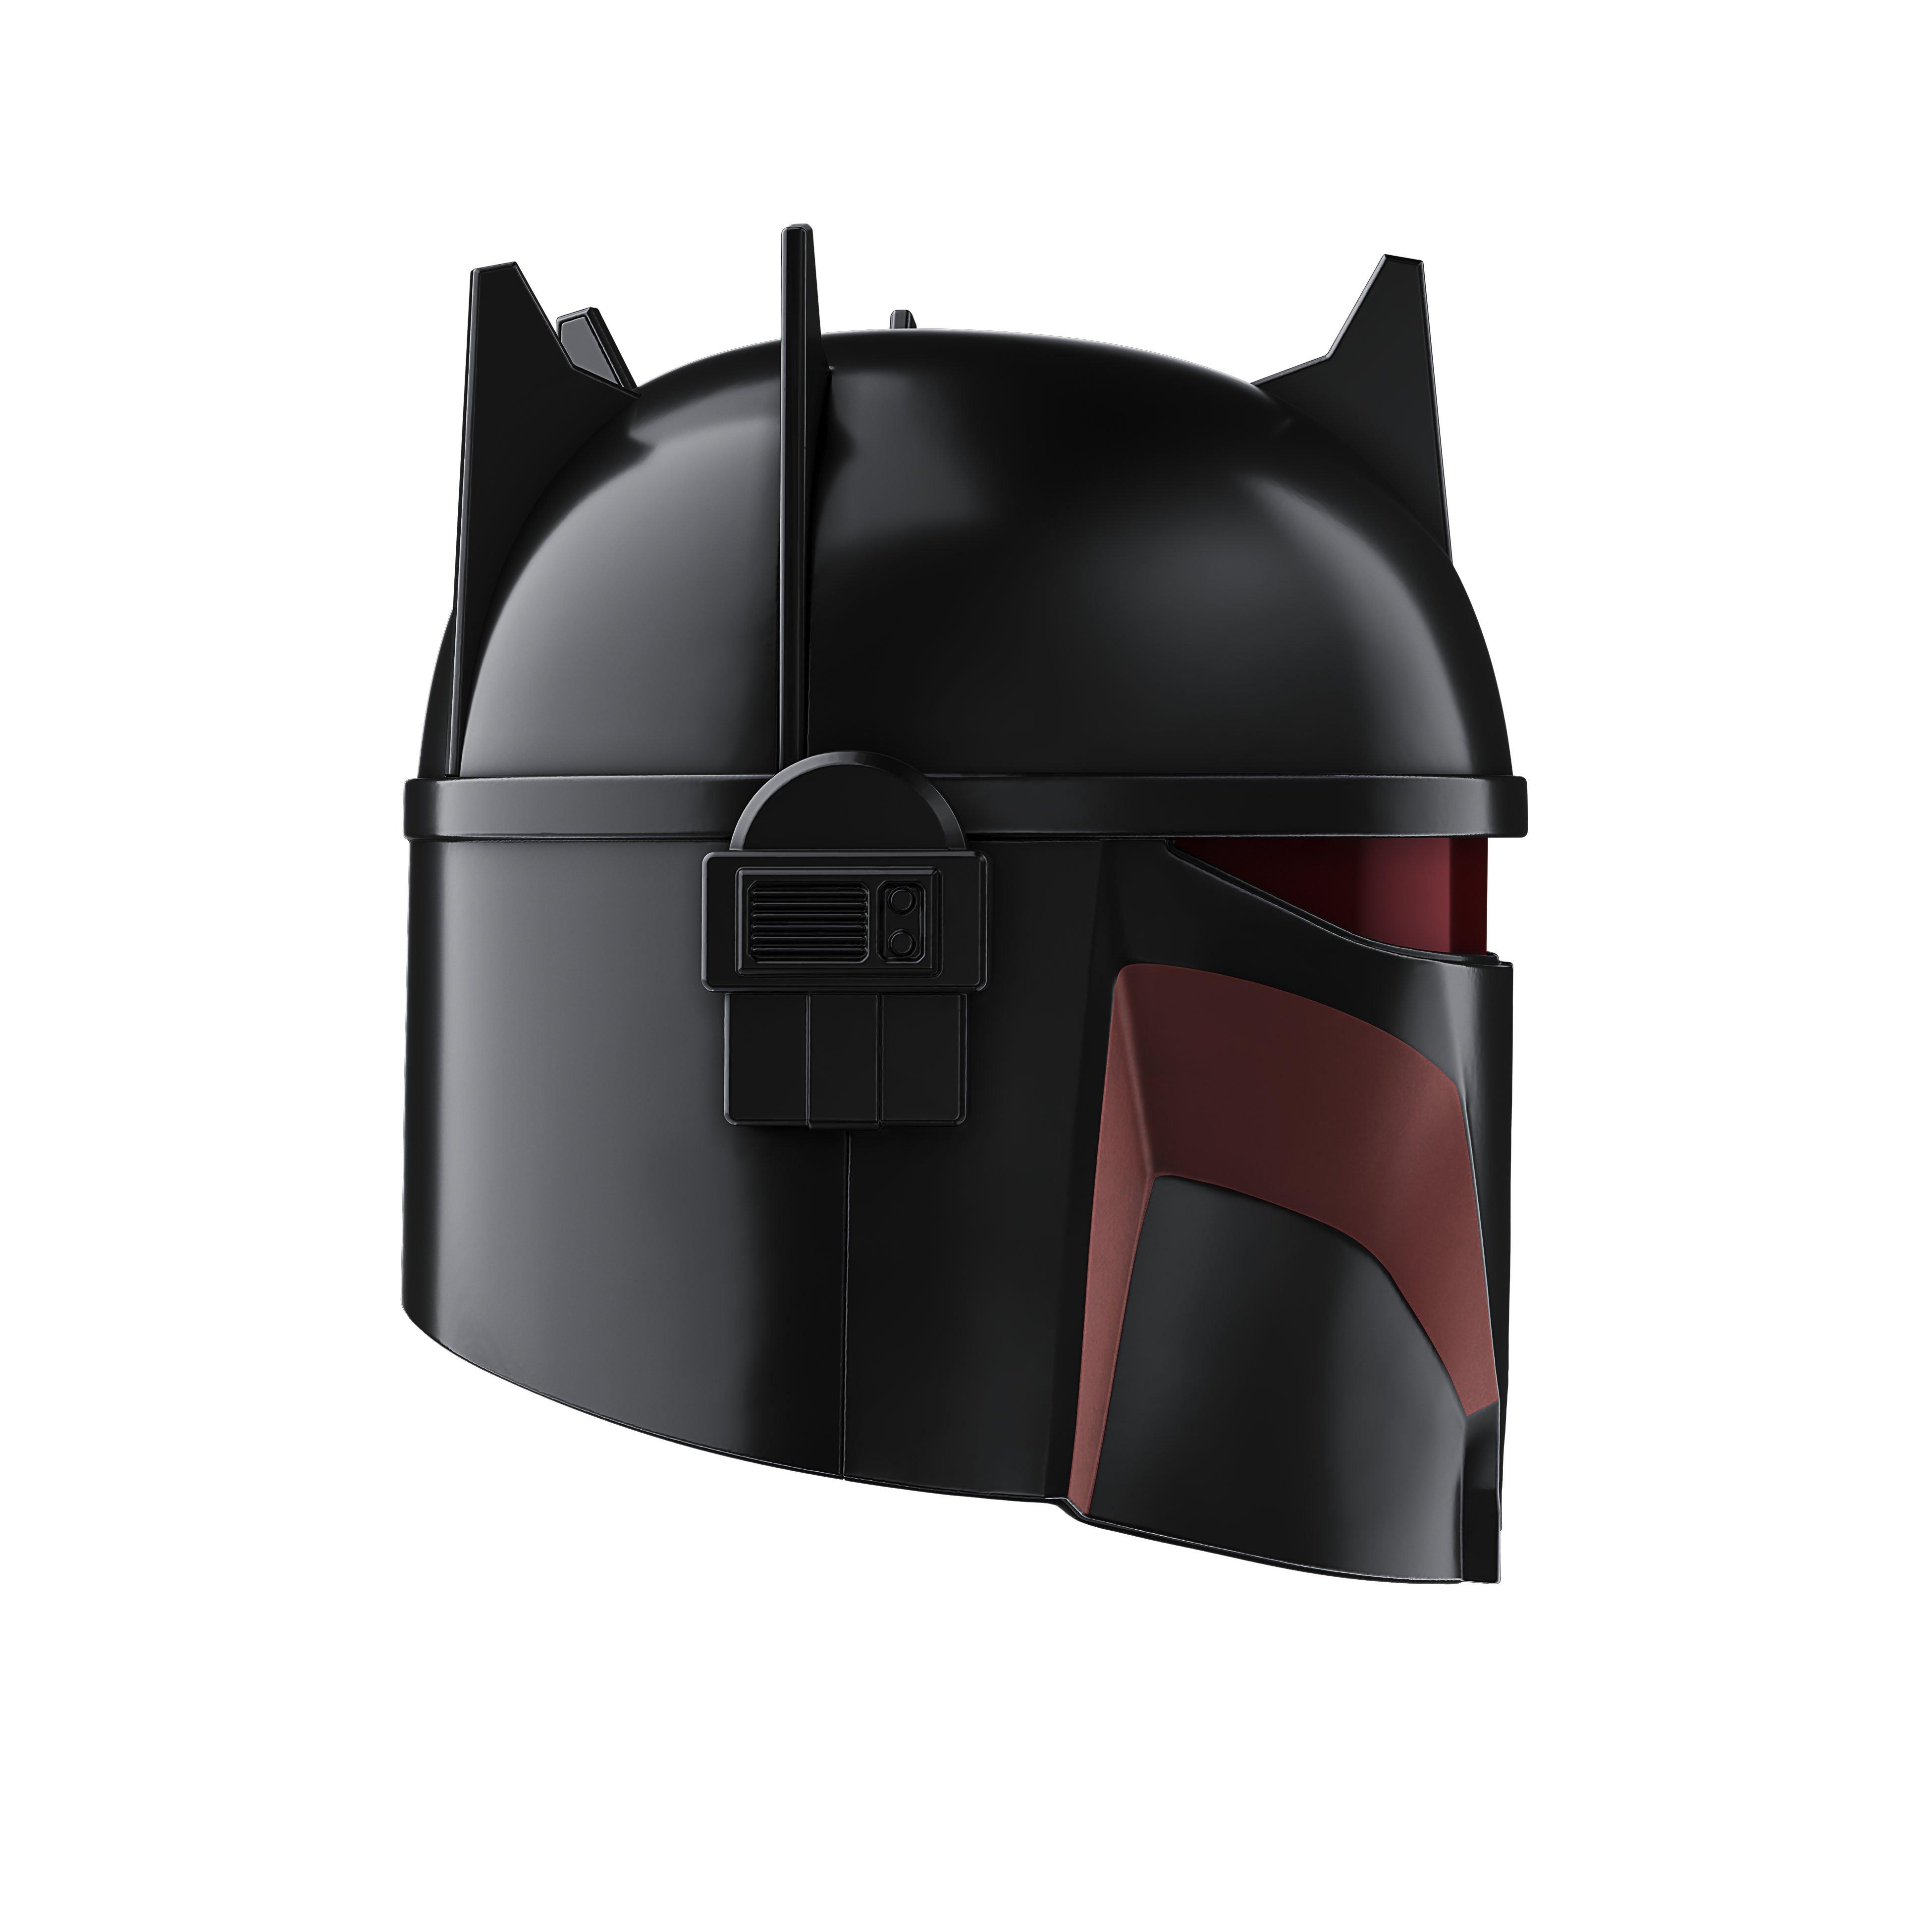 Hasbro Star Wars - Star Wars: The Mandalorian Moff Gideon’s Helmet